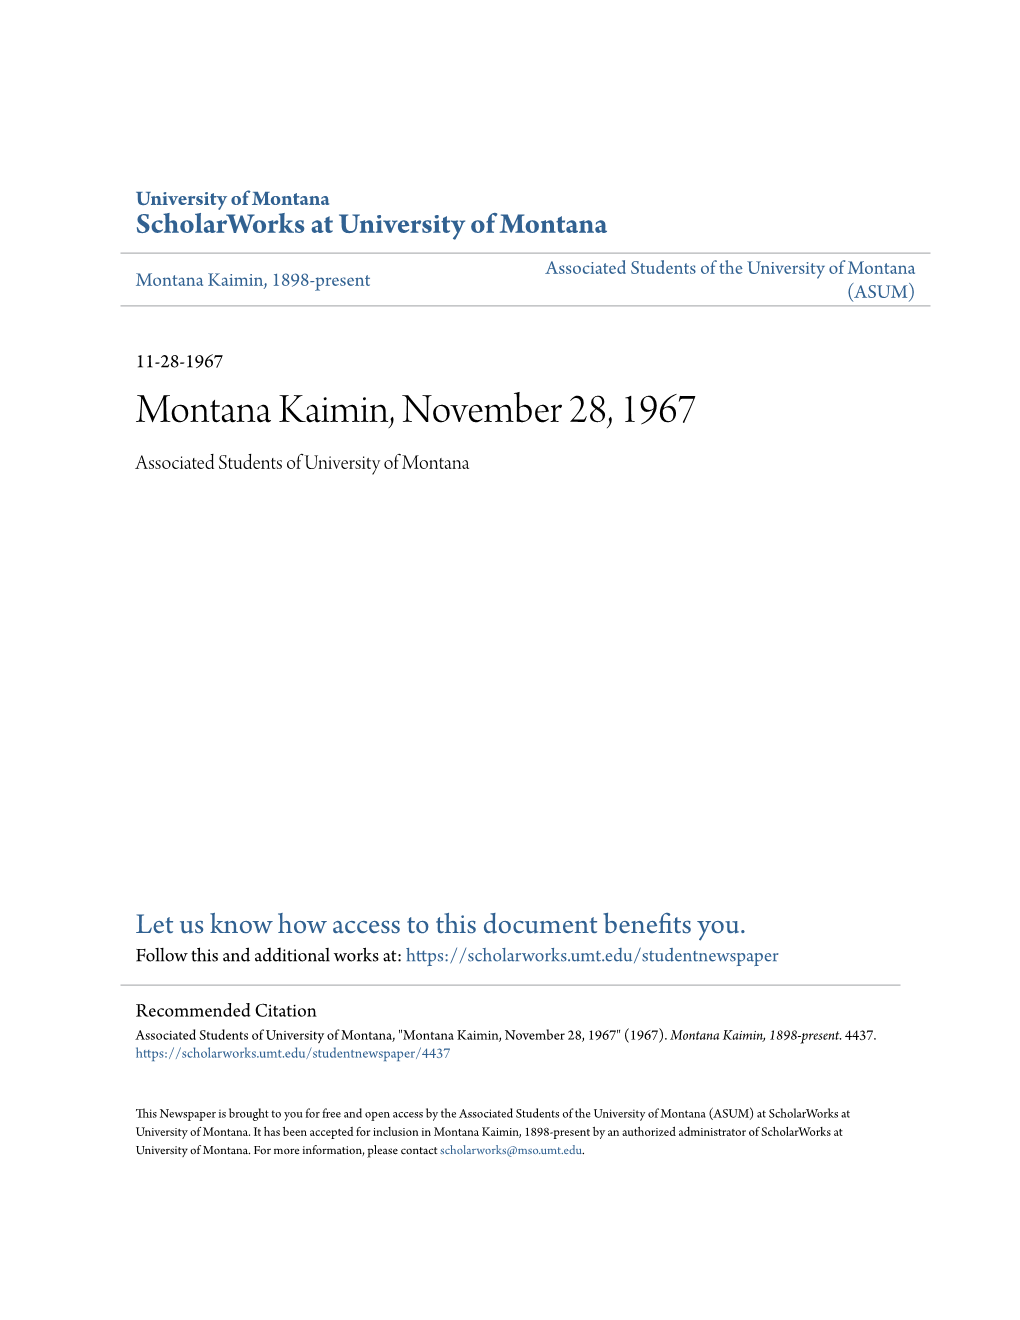 Montana Kaimin, November 28, 1967 Associated Students of University of Montana